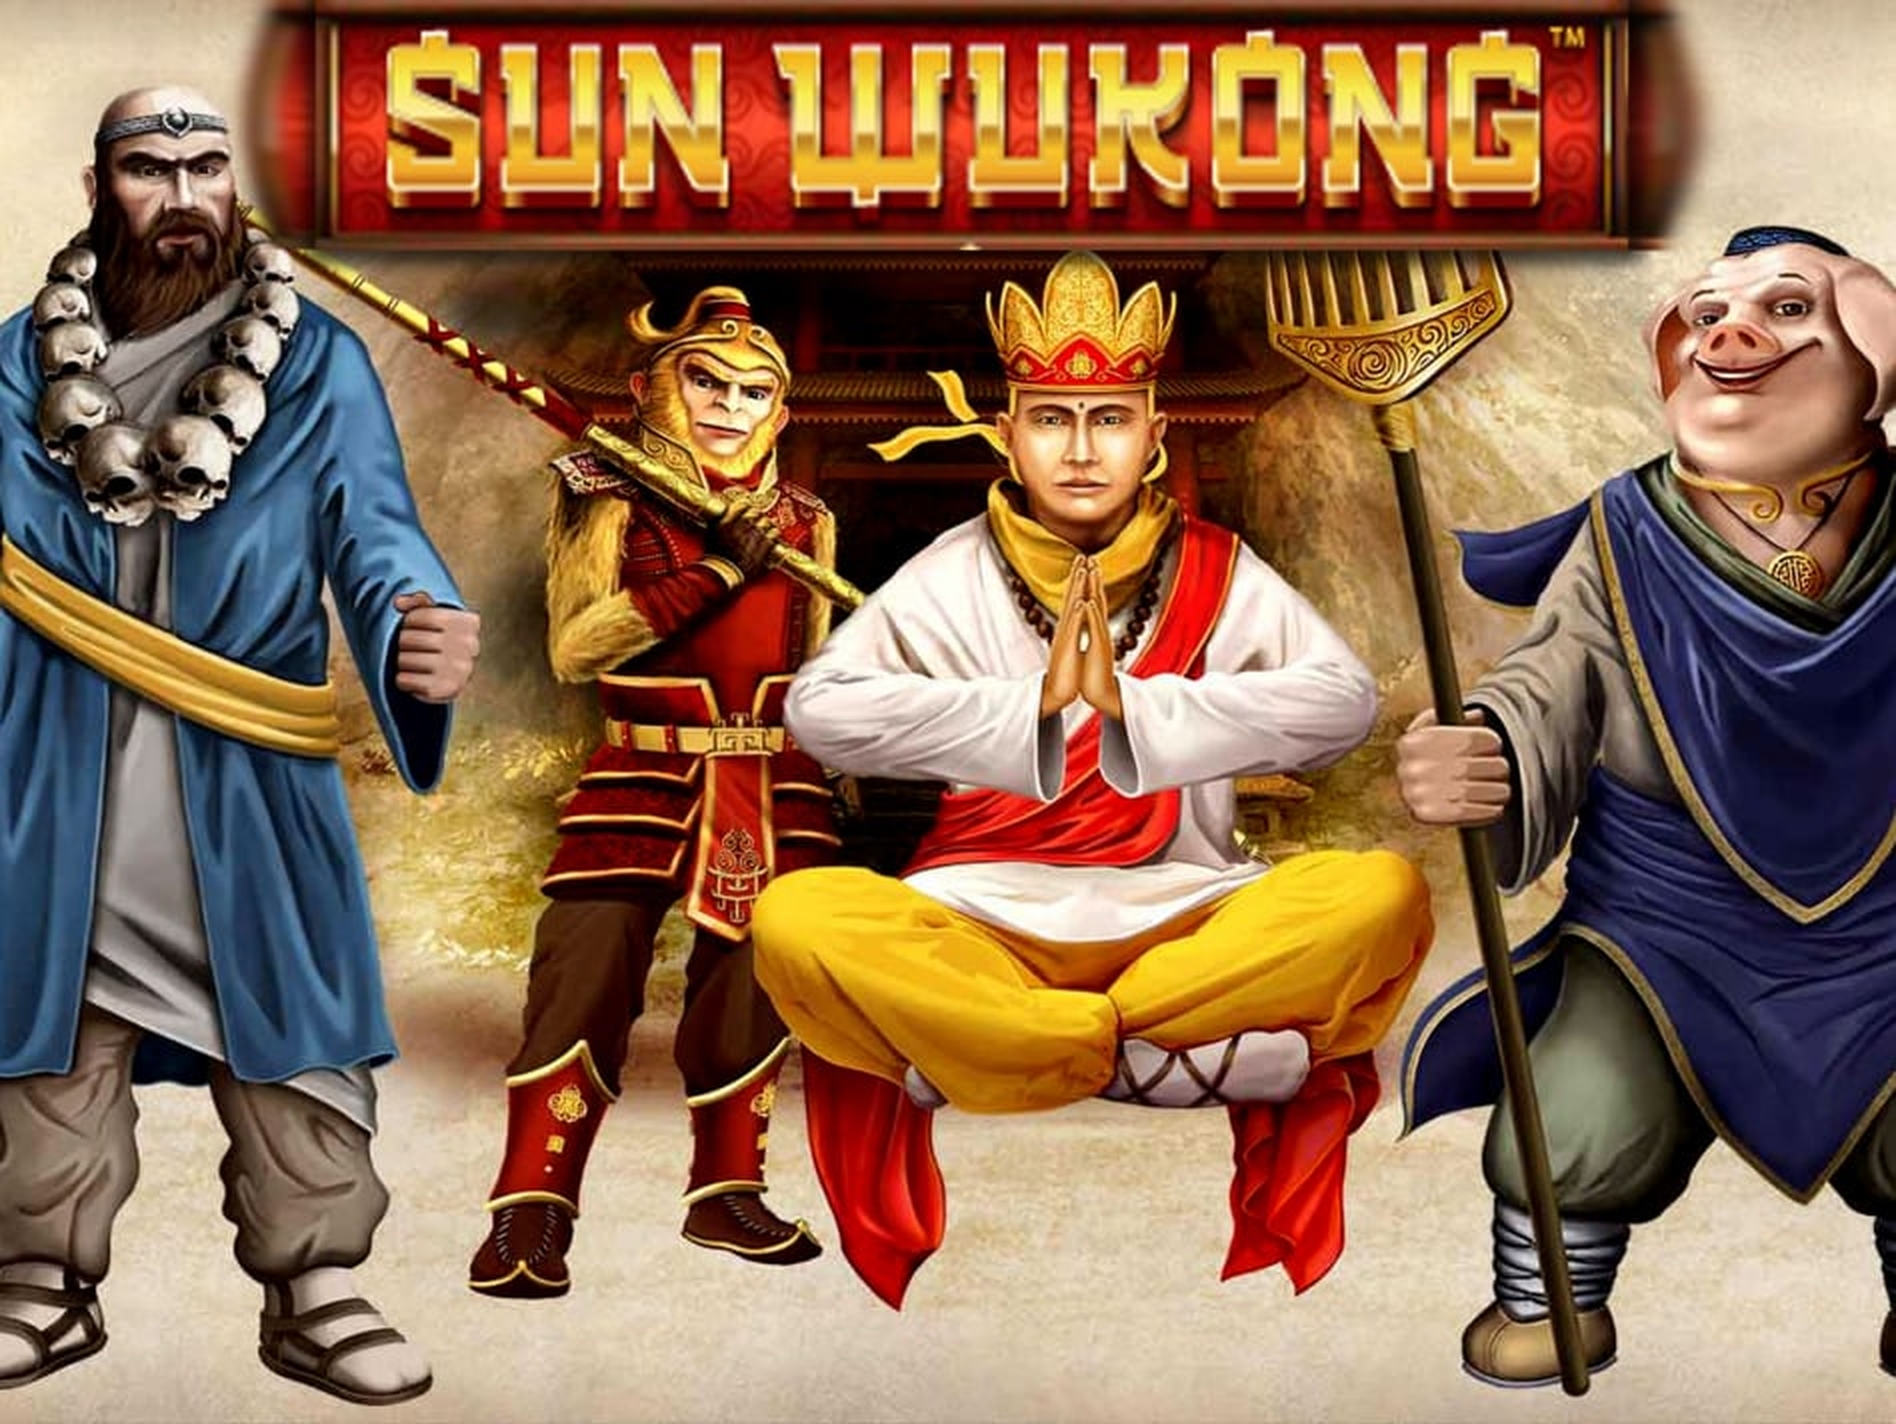 Sun Wukong demo